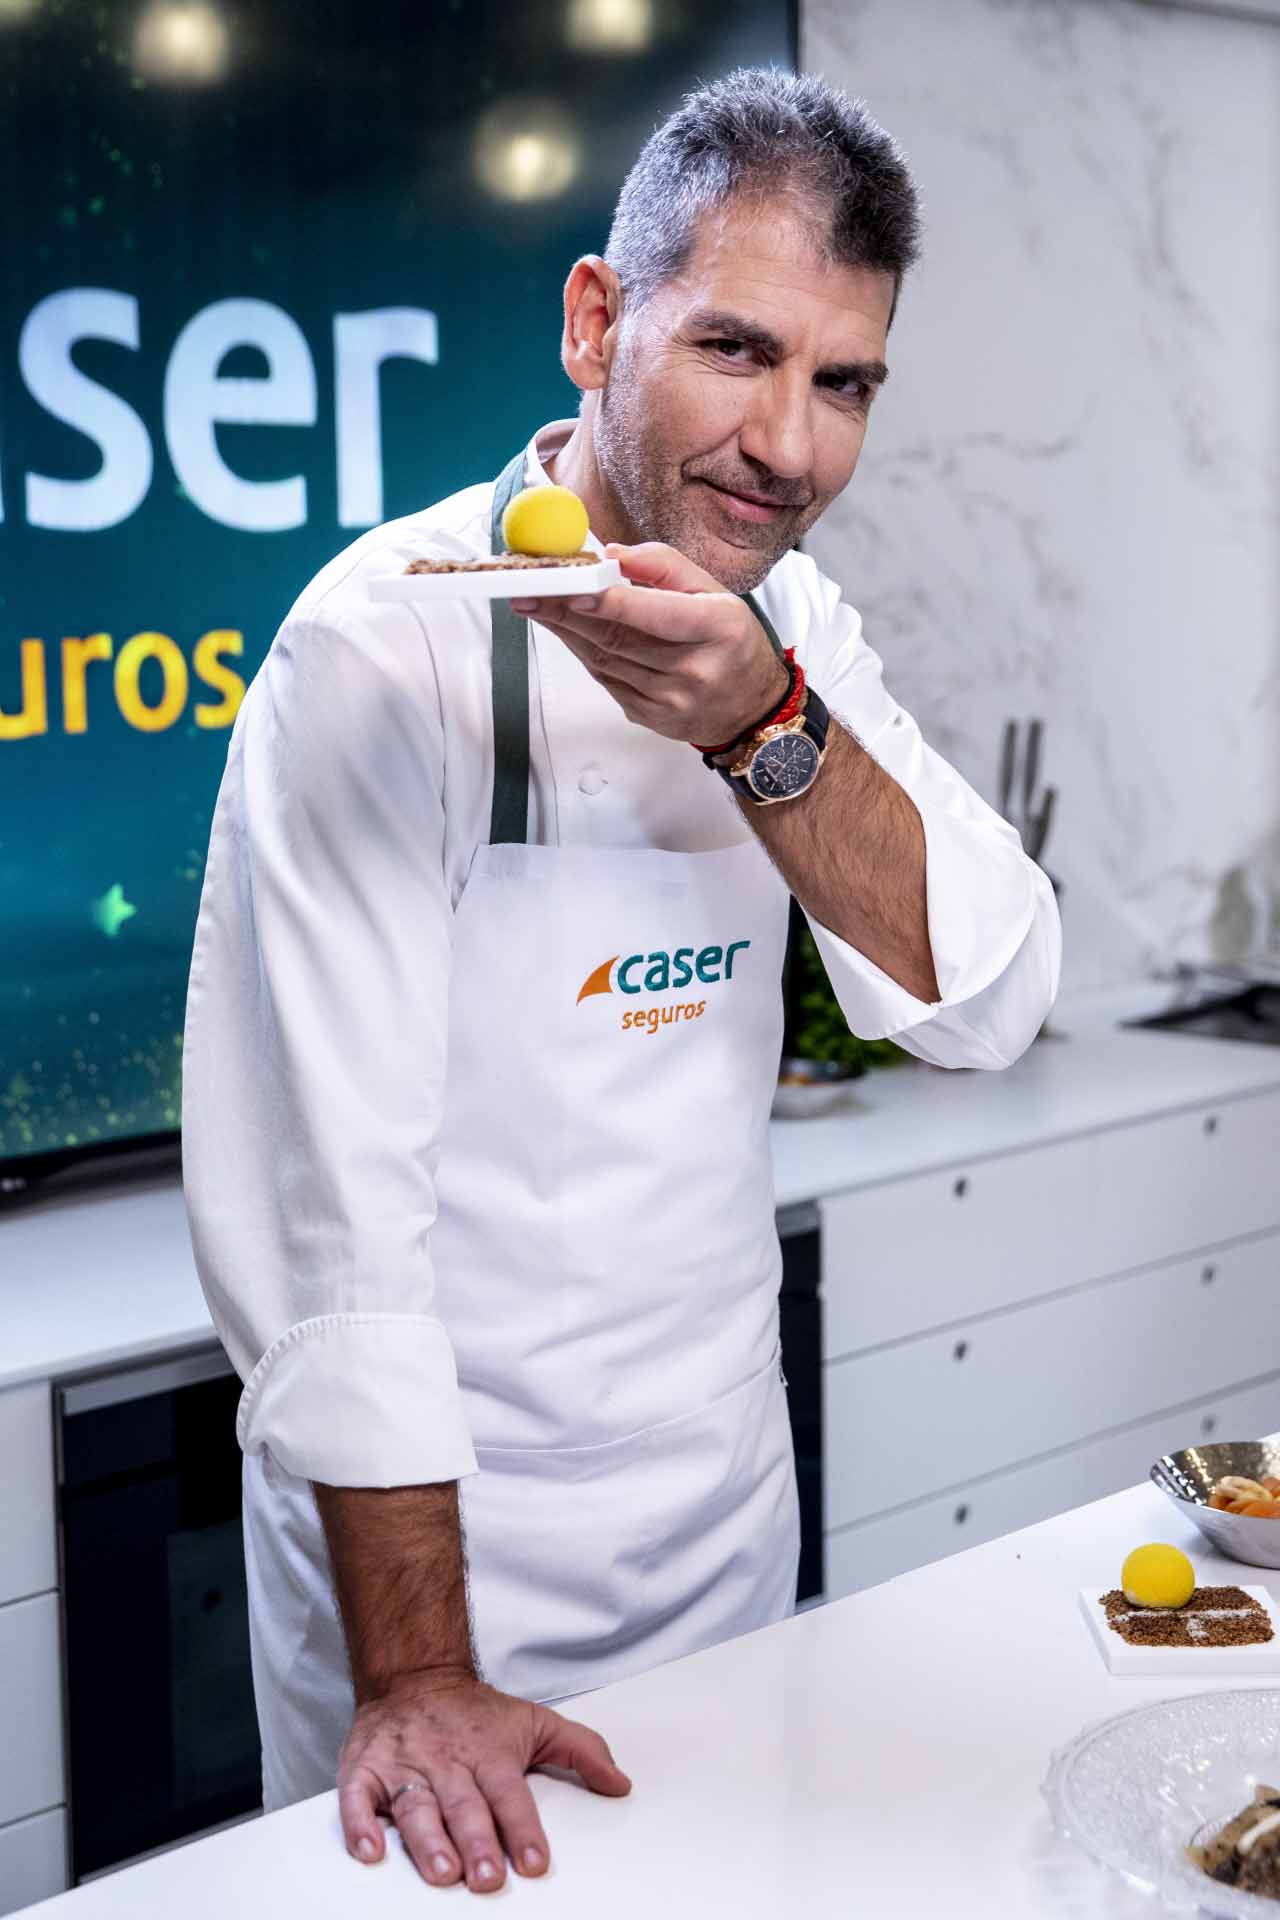 Chef Paco Roncero during Caser Seguros event in Madrid, December 15, 2020